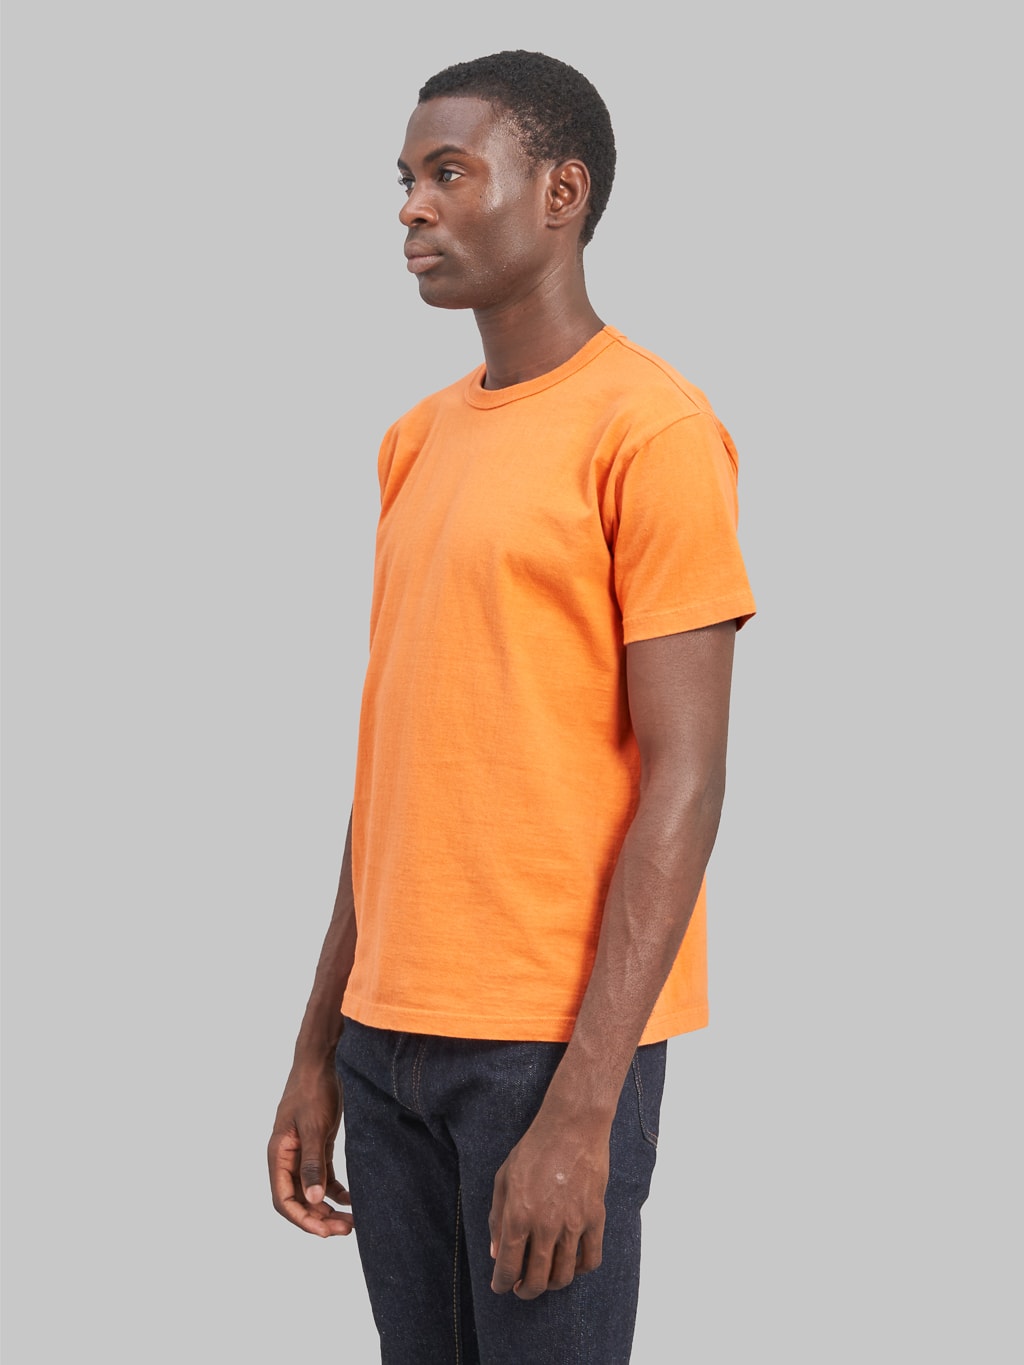 Samurai Jeans SJST-M-OVS Heavyweight Plain T-Shirt Orange